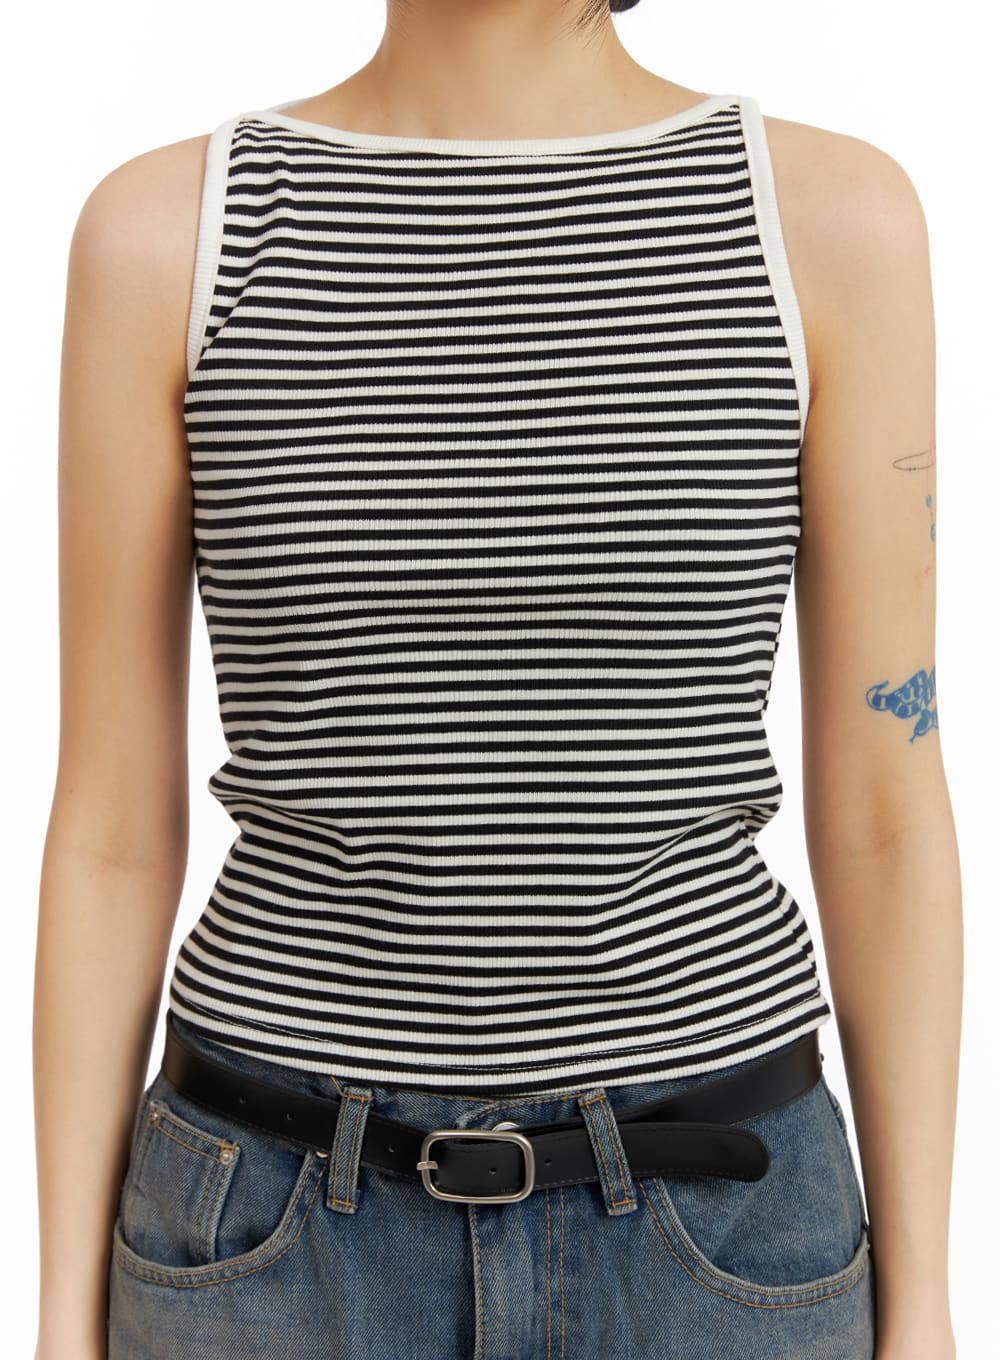 striped-cotton-sleeveless-top-im414